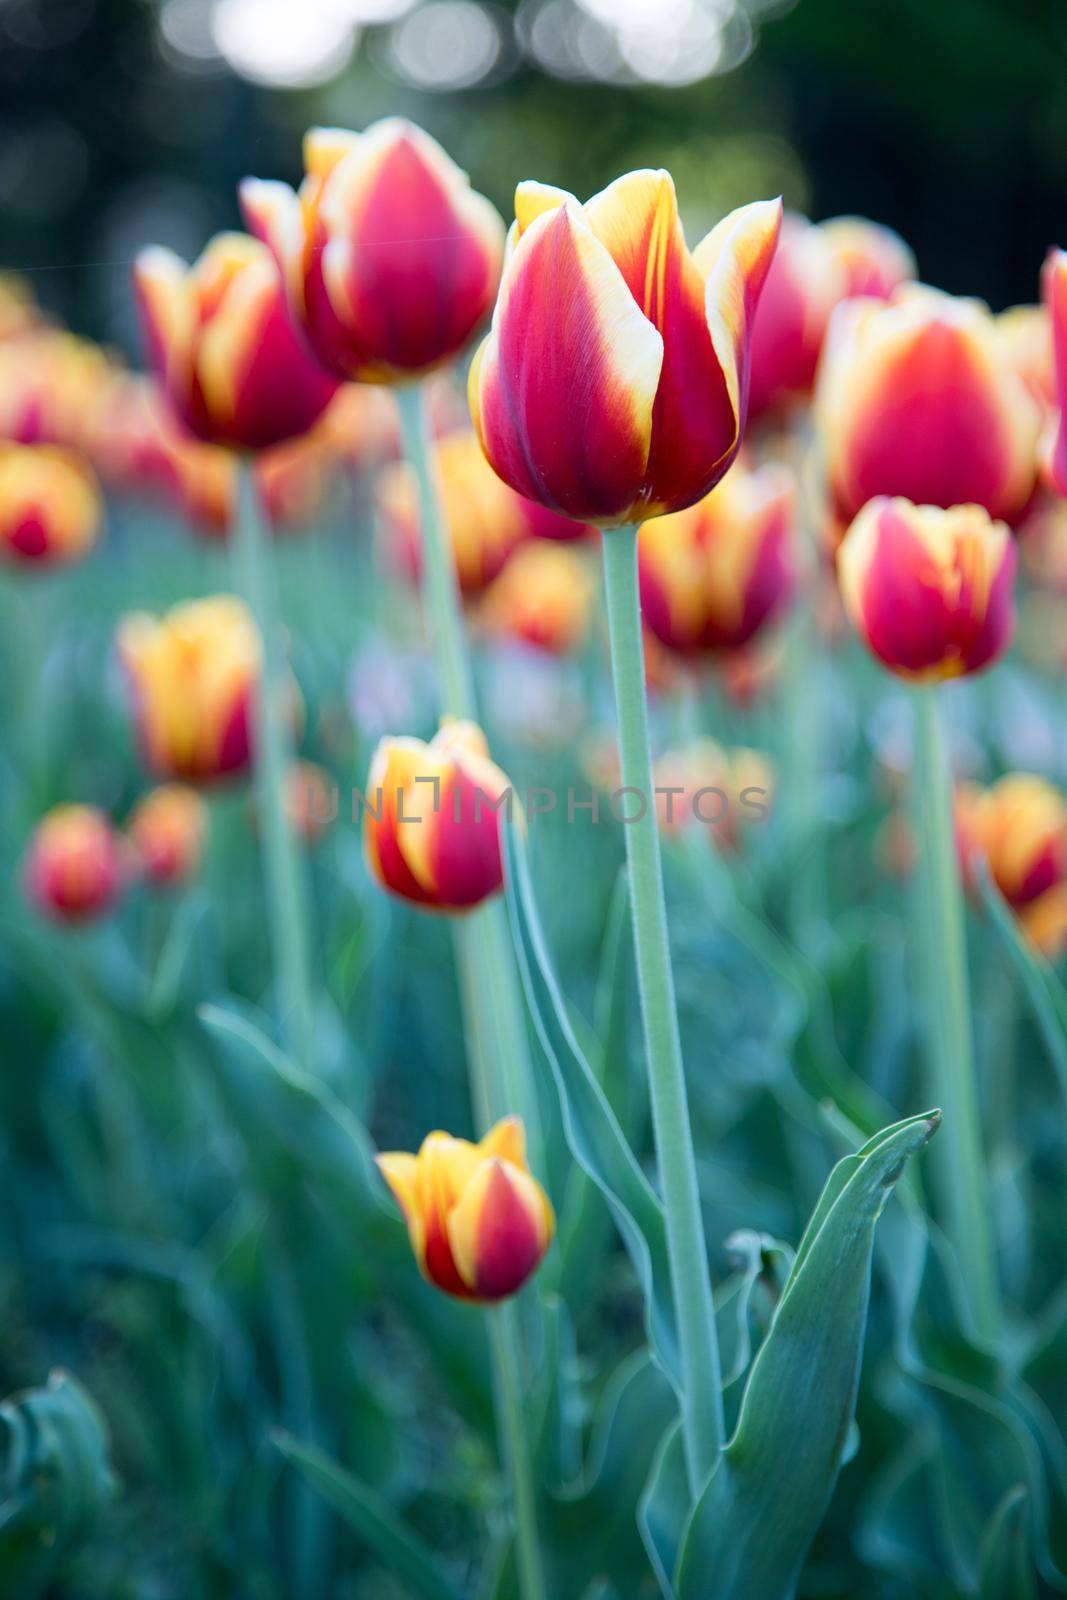 Arrangement of colorful spring flowers in the public park, springtime by Daxenbichler